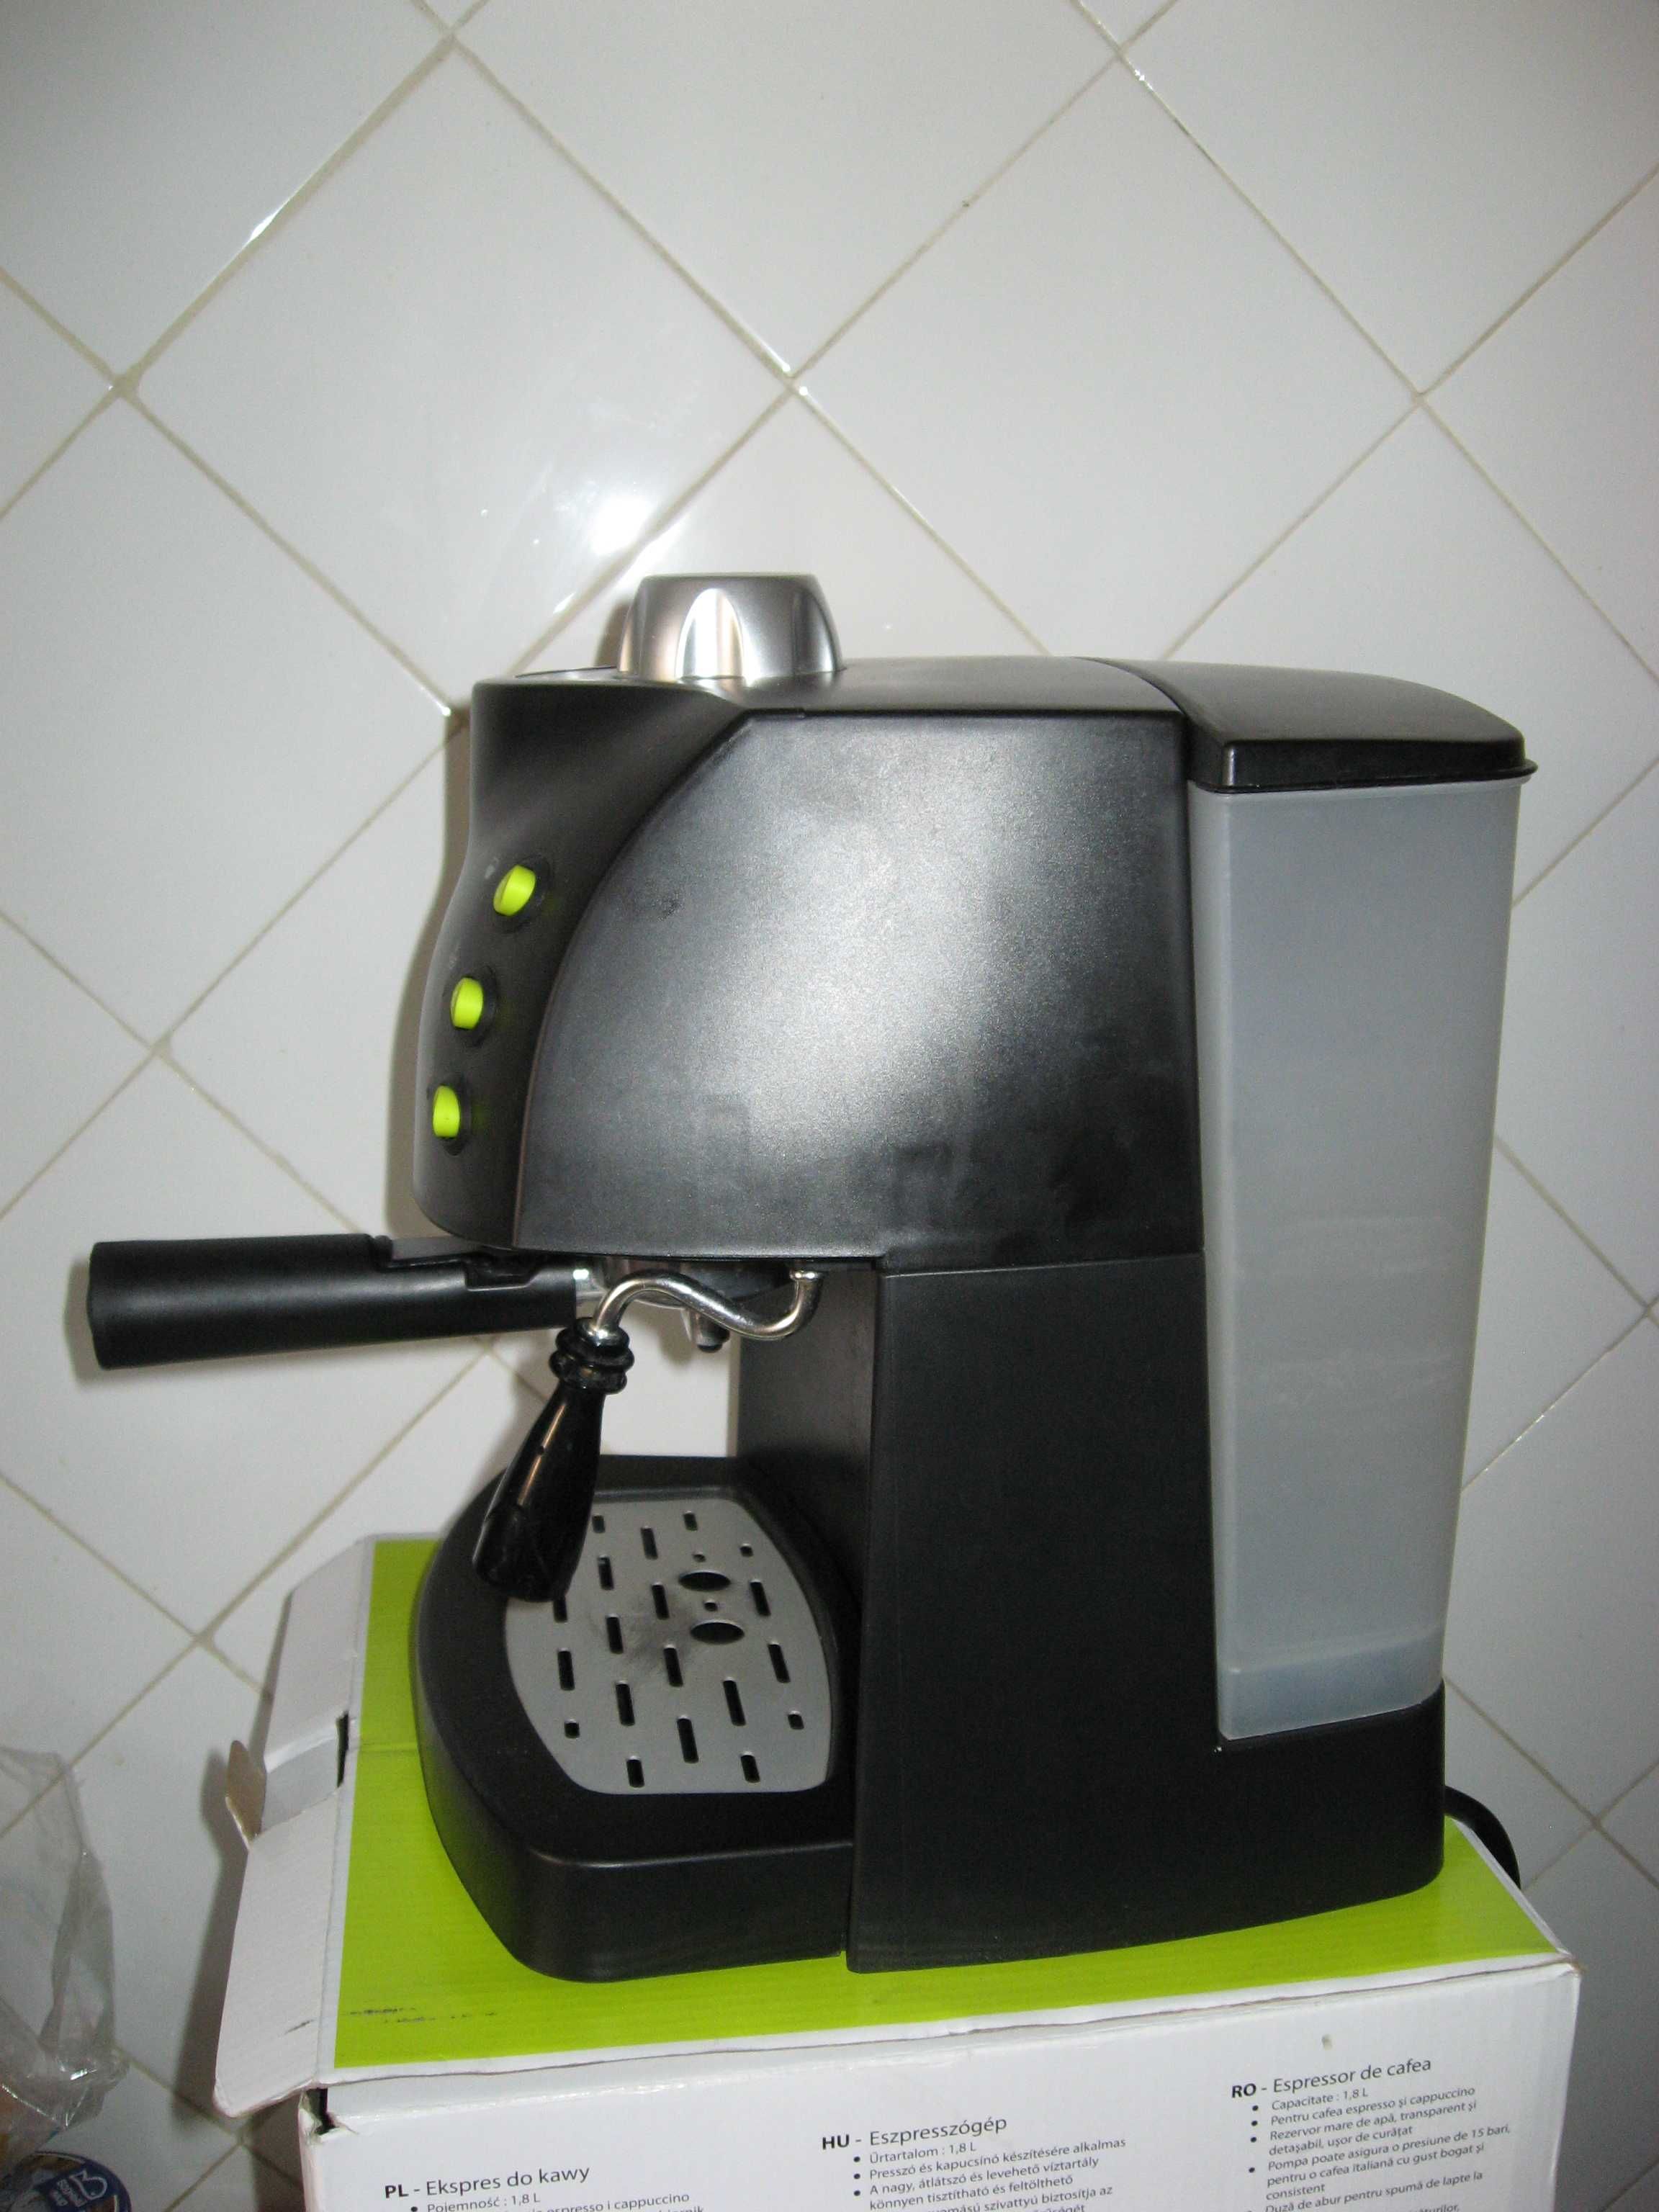 Кофеварка Selecline CM4600